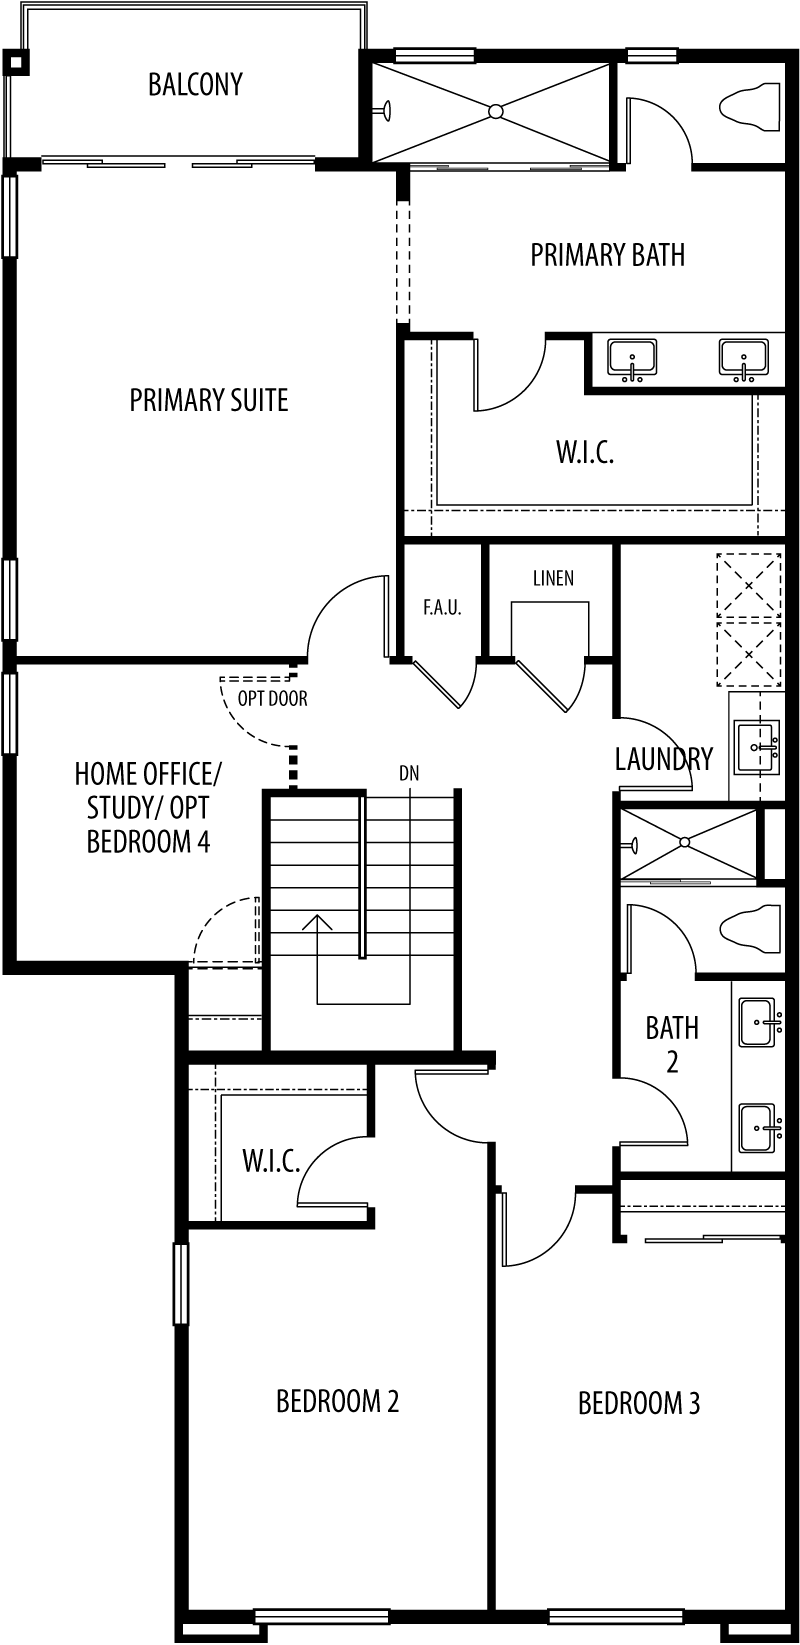 plan 3 second floor footprint.